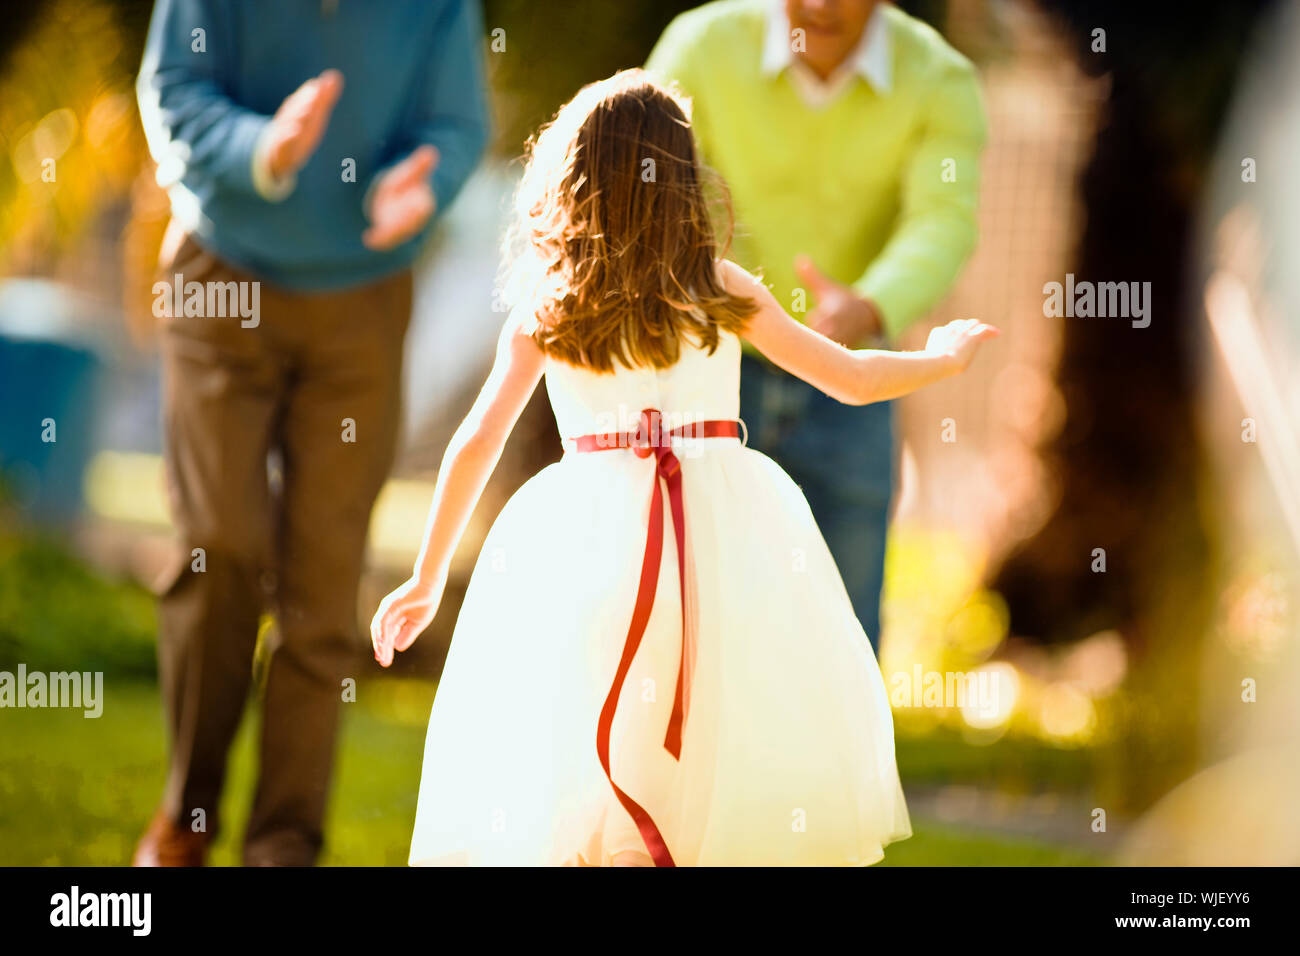 Young girl in a party dress runs towards two men in a garden. Stock Photo